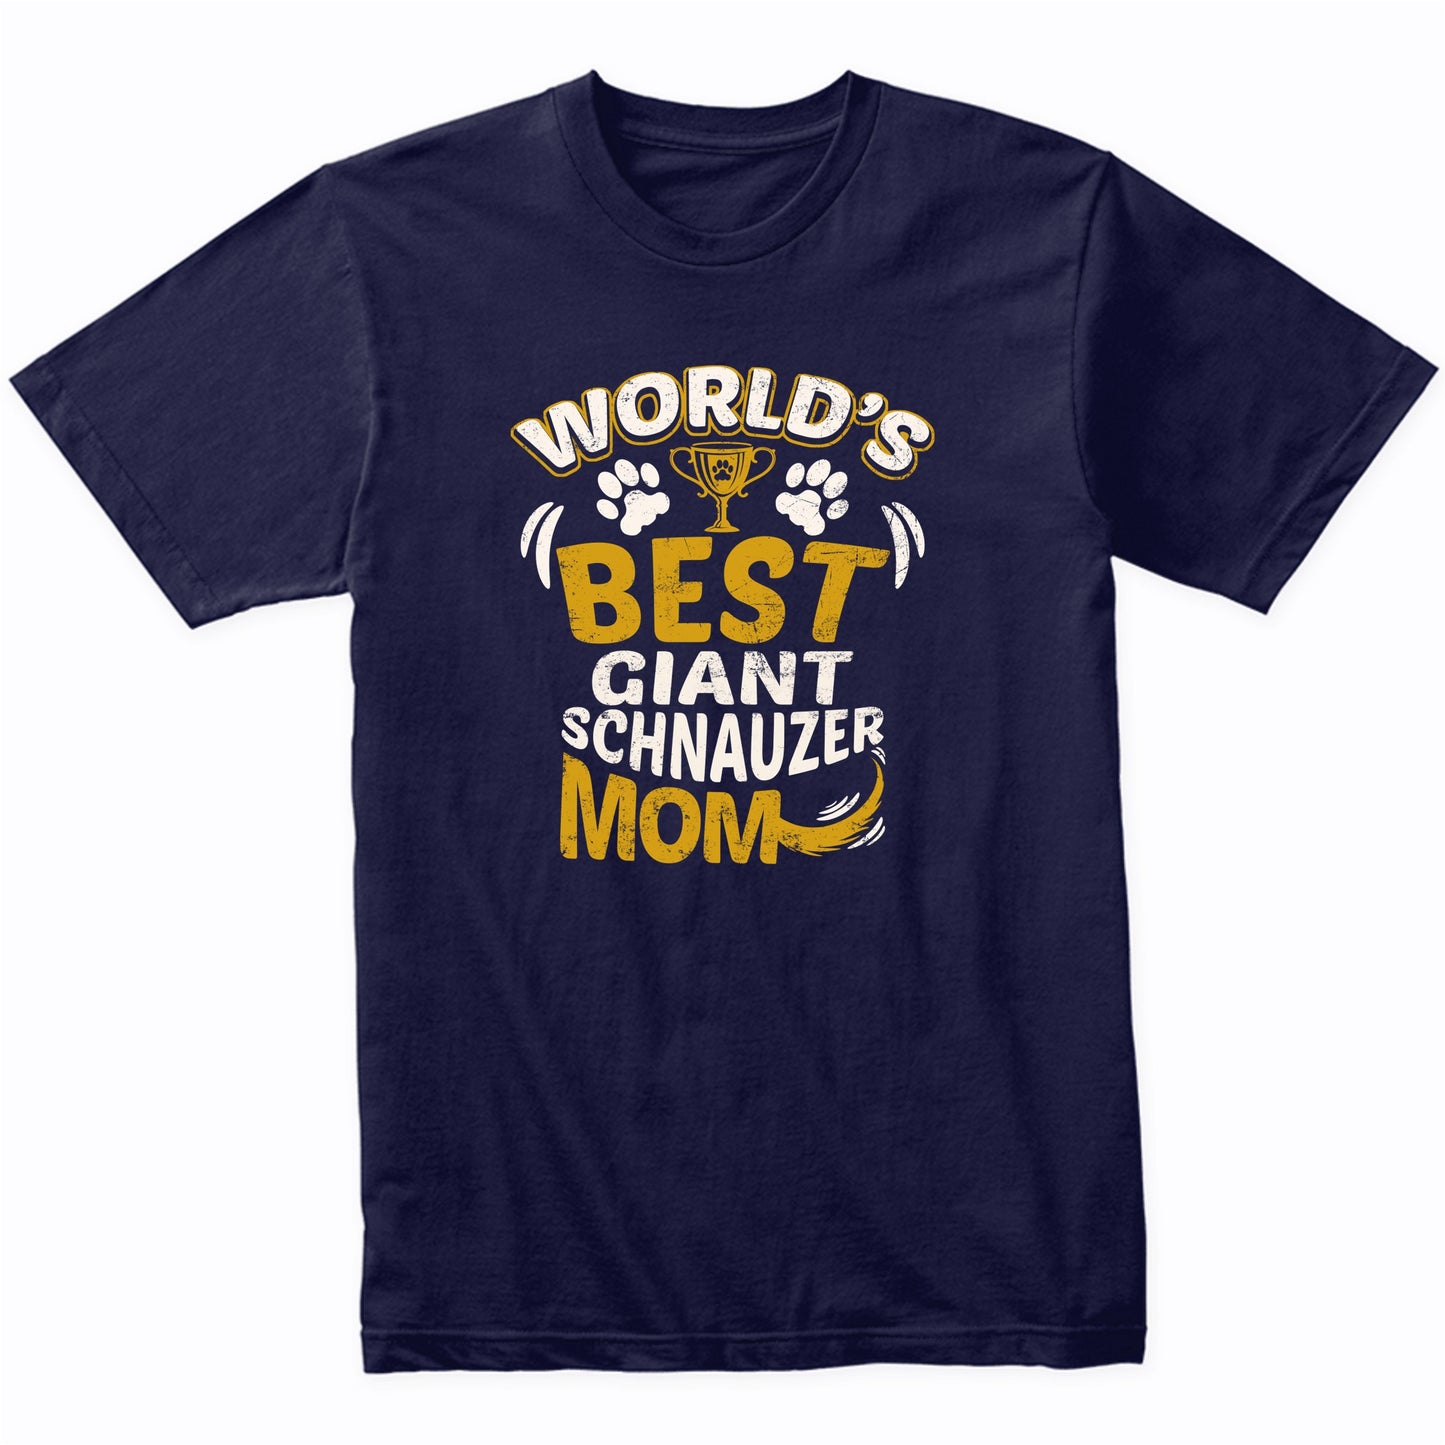 World's Best Giant Schnauzer Mom Graphic T-Shirt